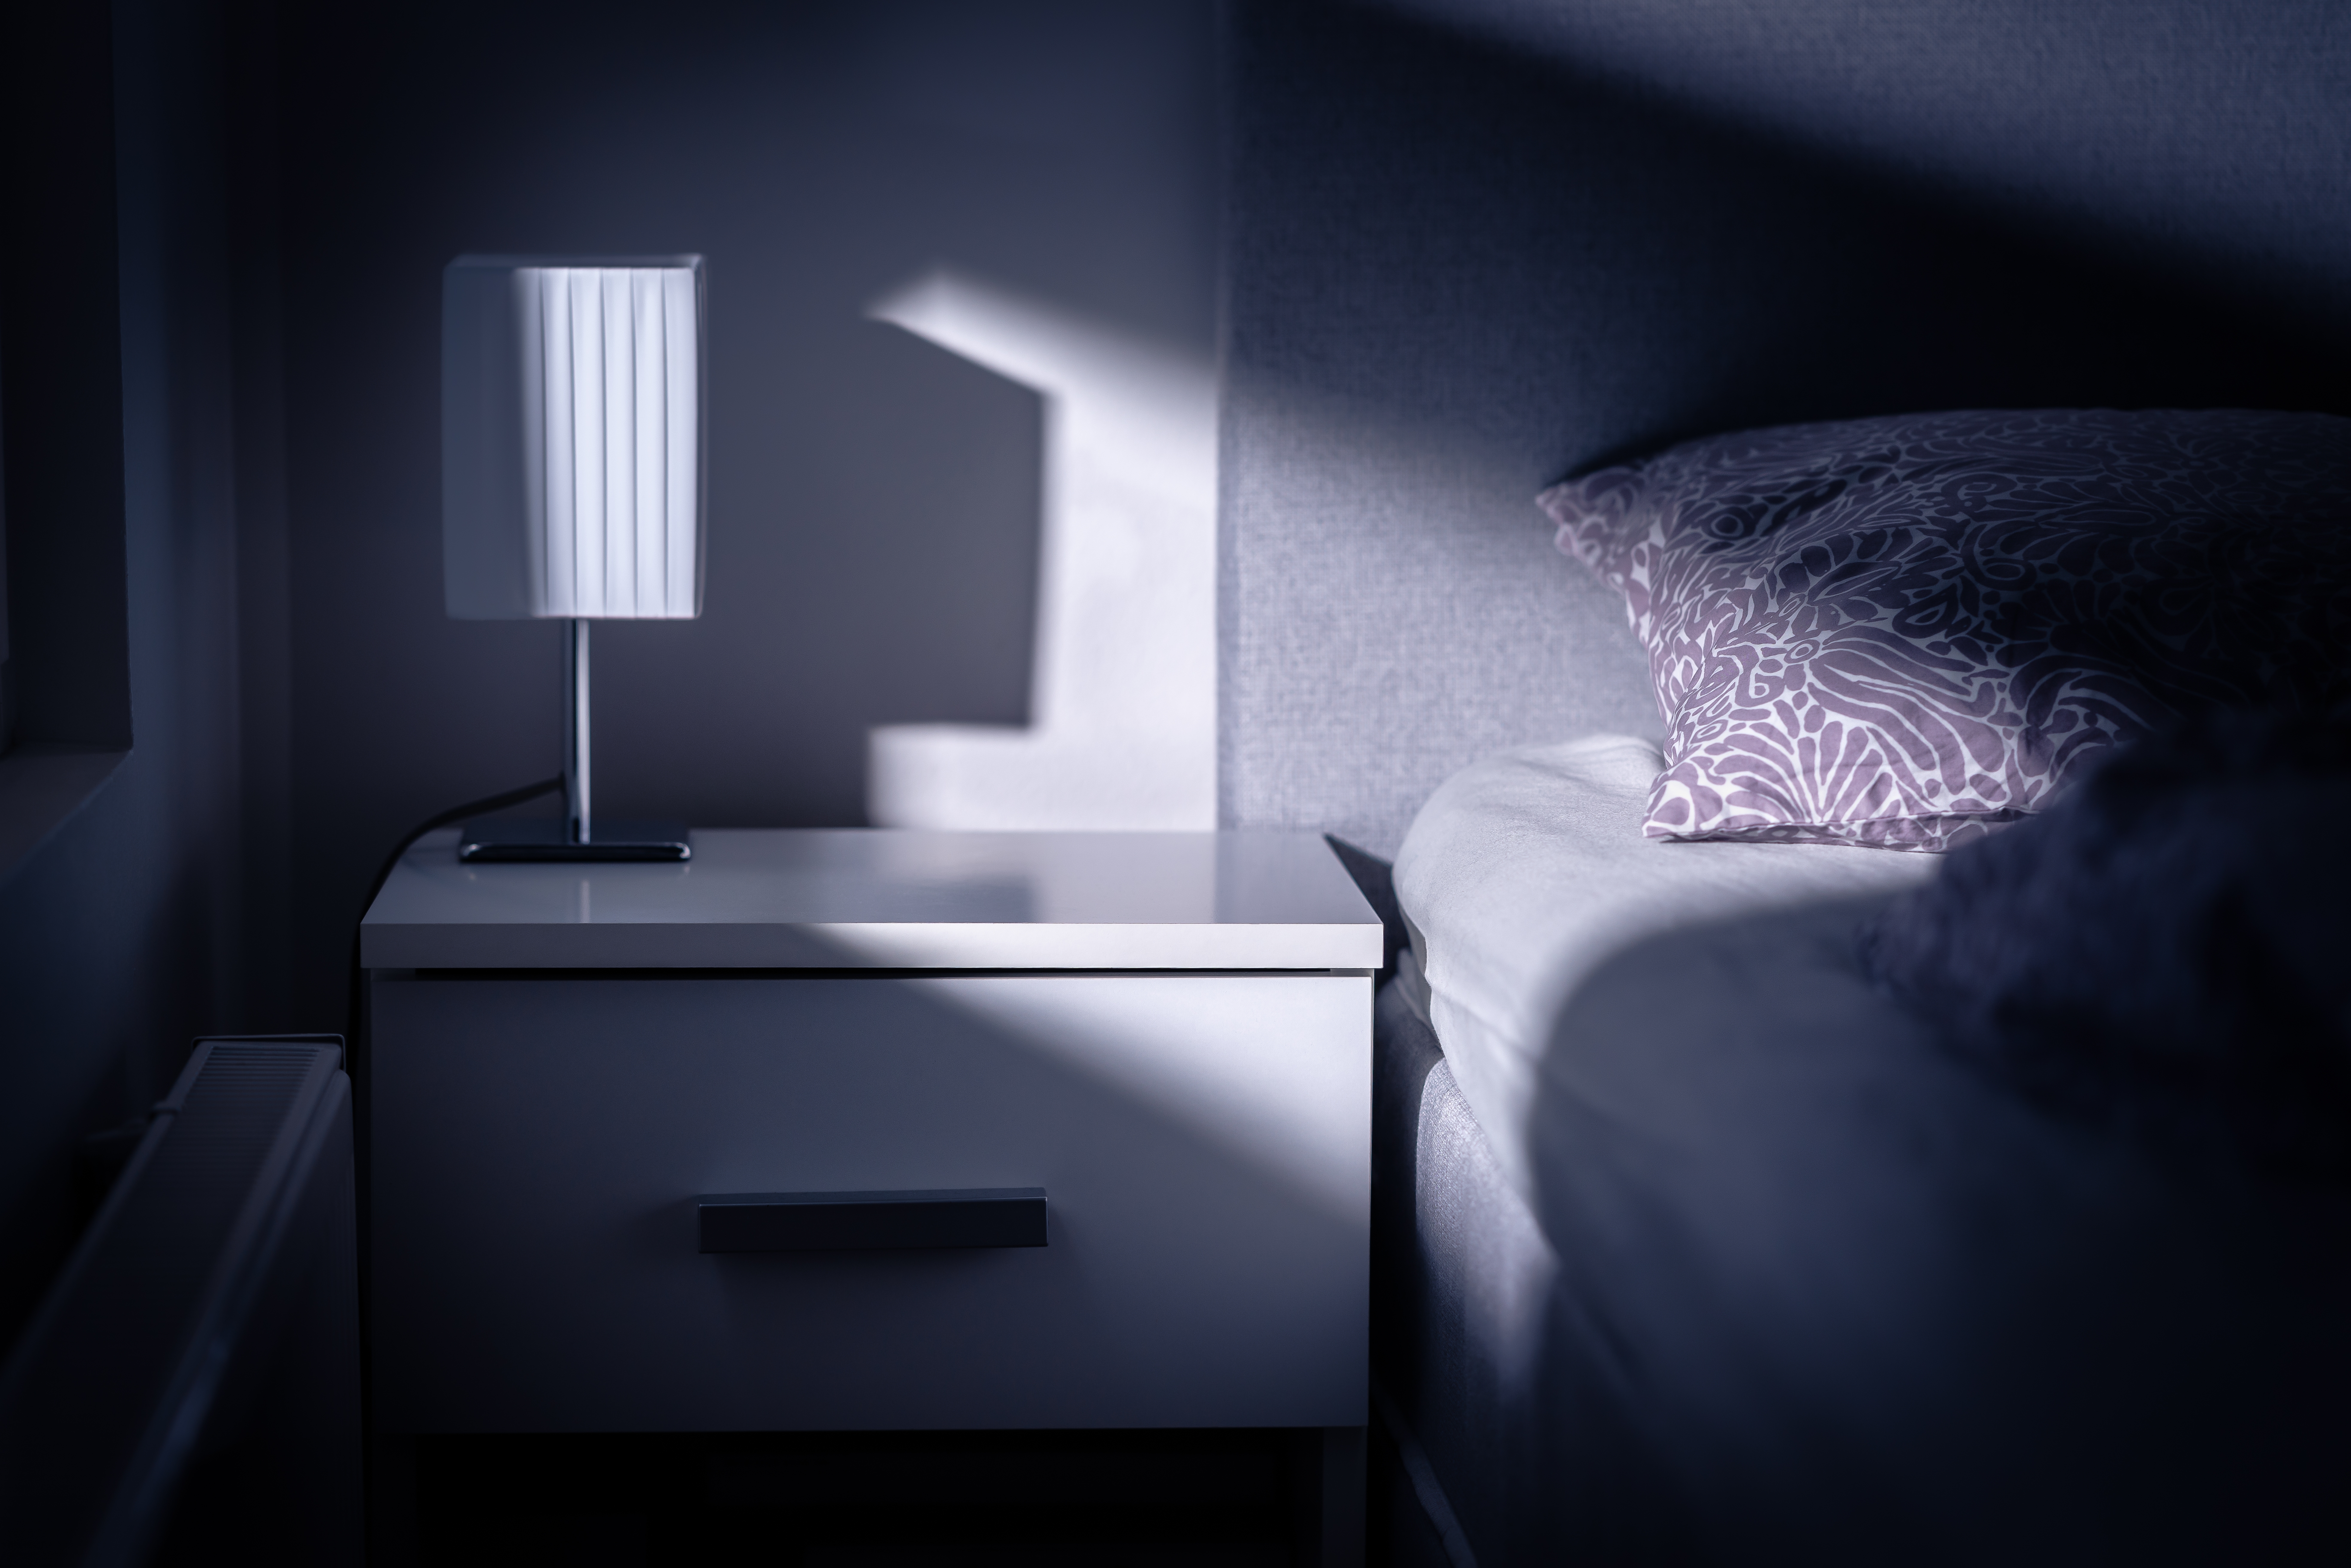 Moonlight in bedroom at night | Source: Shutterstock